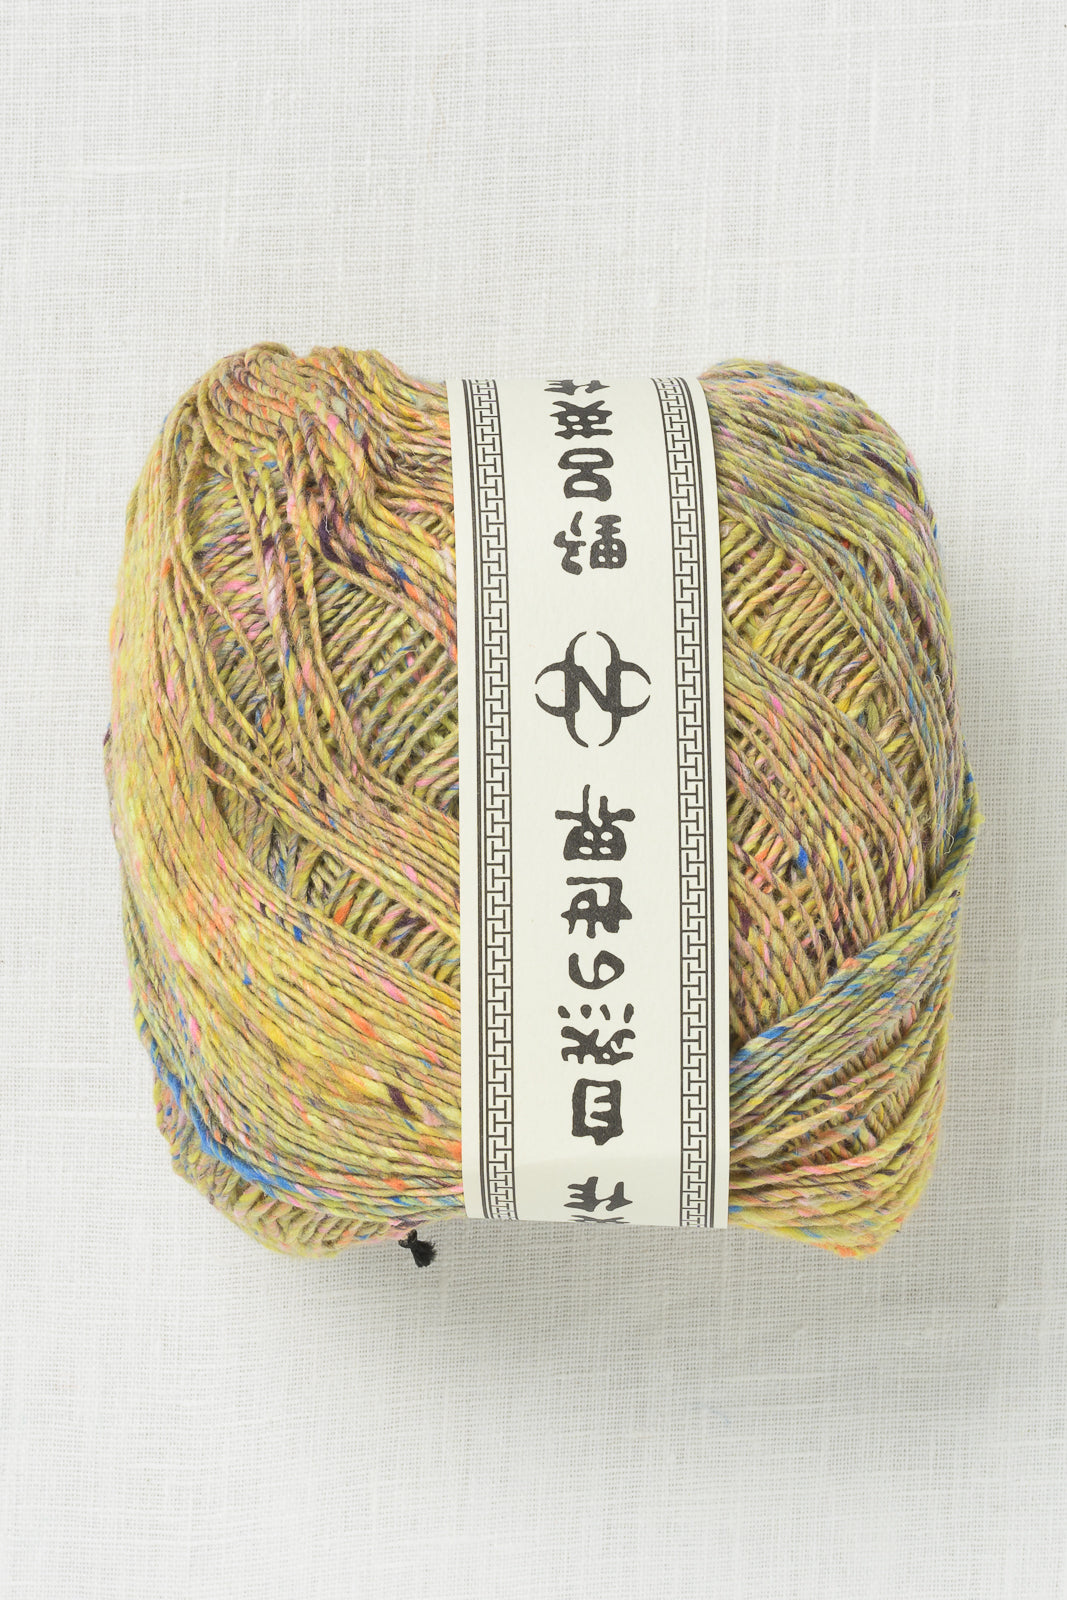 Noro Kakigori 11 Kokubunji – Wool and Company